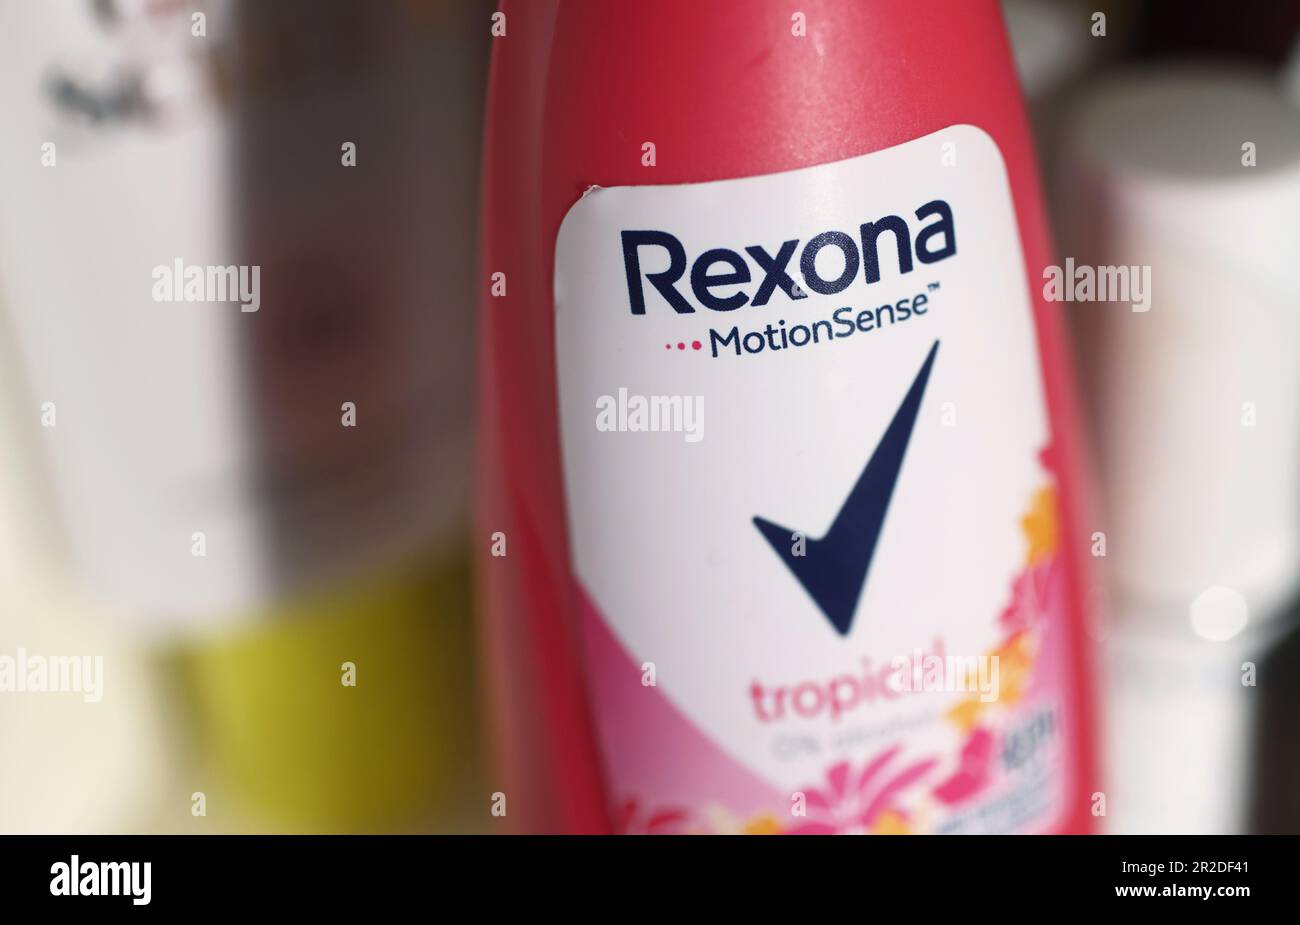 Verschiedene Produkte im Badezimmer, Rexona Deodorant. Stockfoto